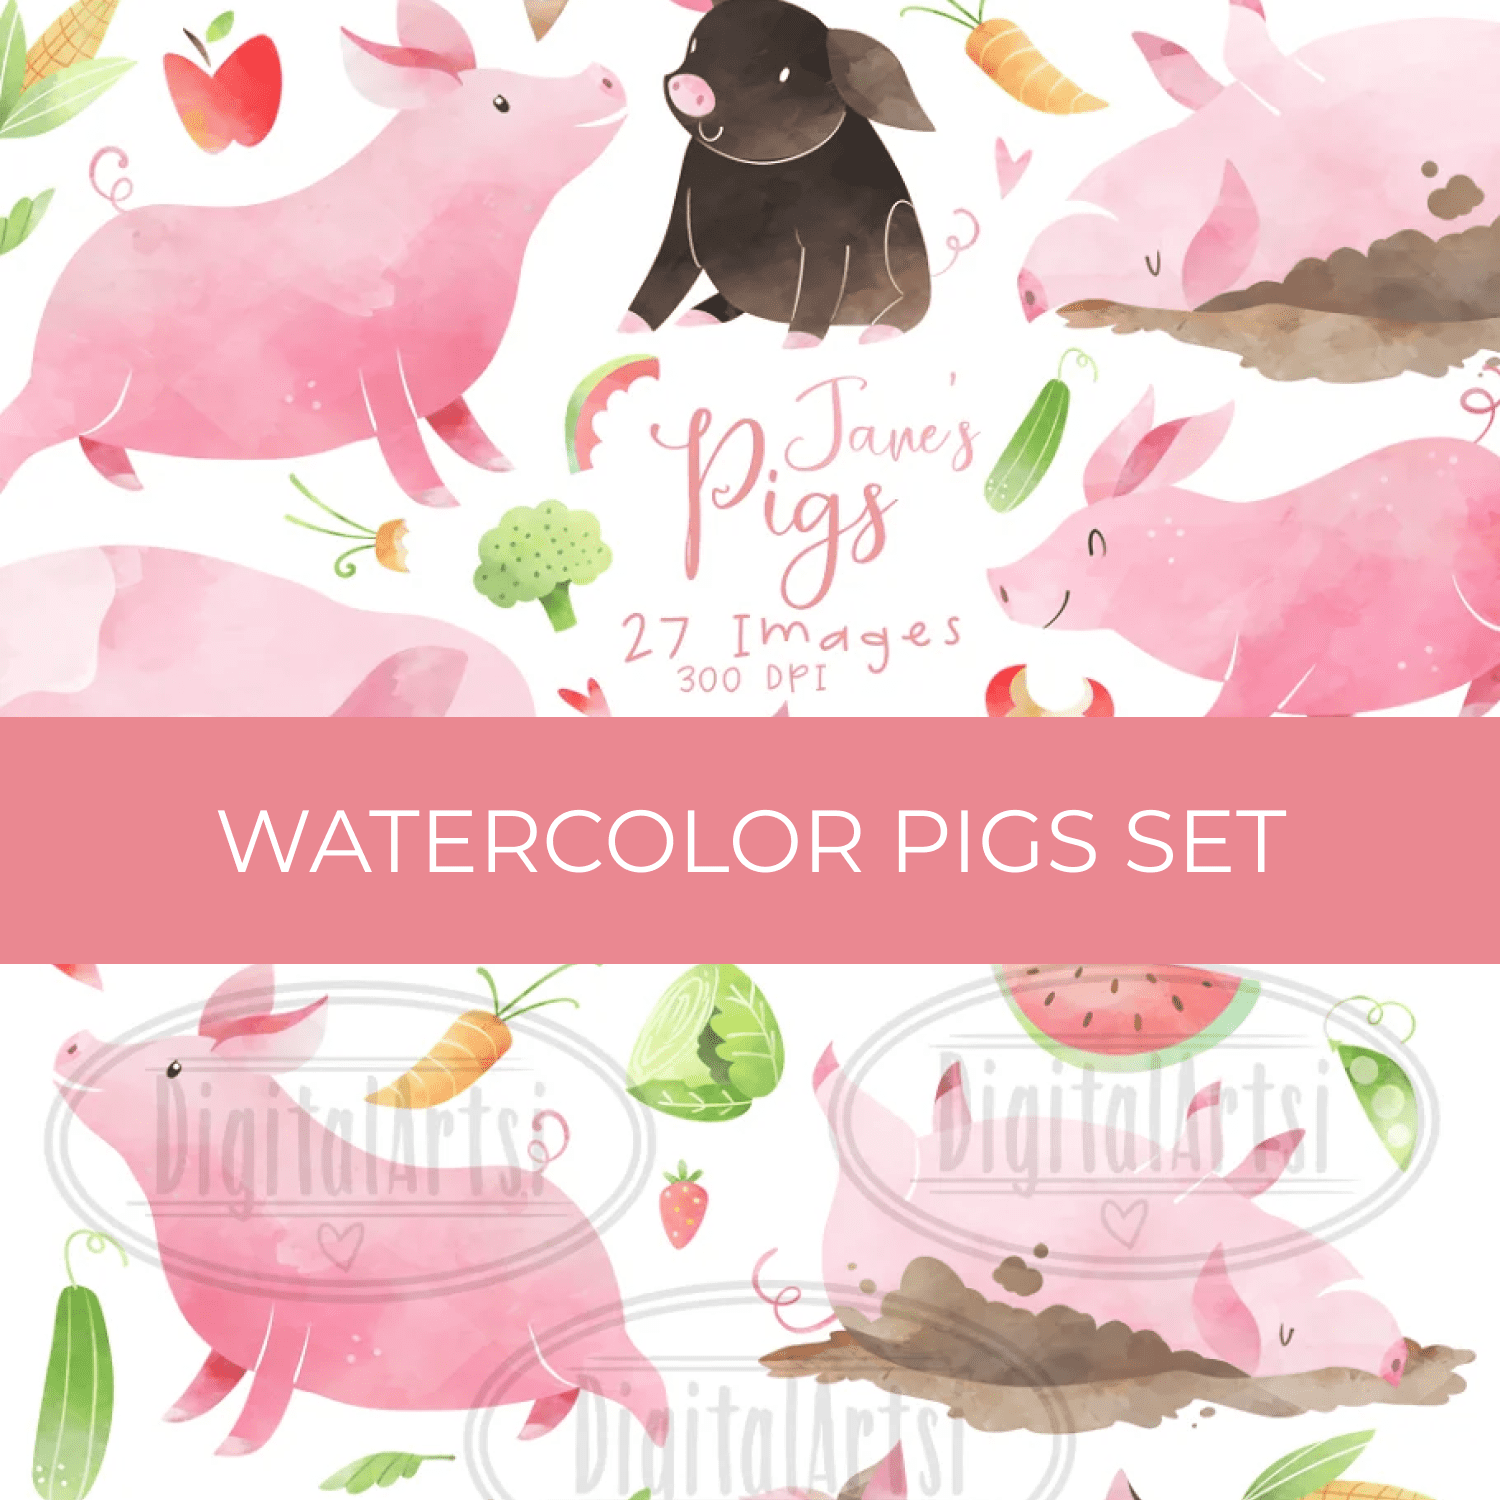 Watercolor Pigs Set cover.